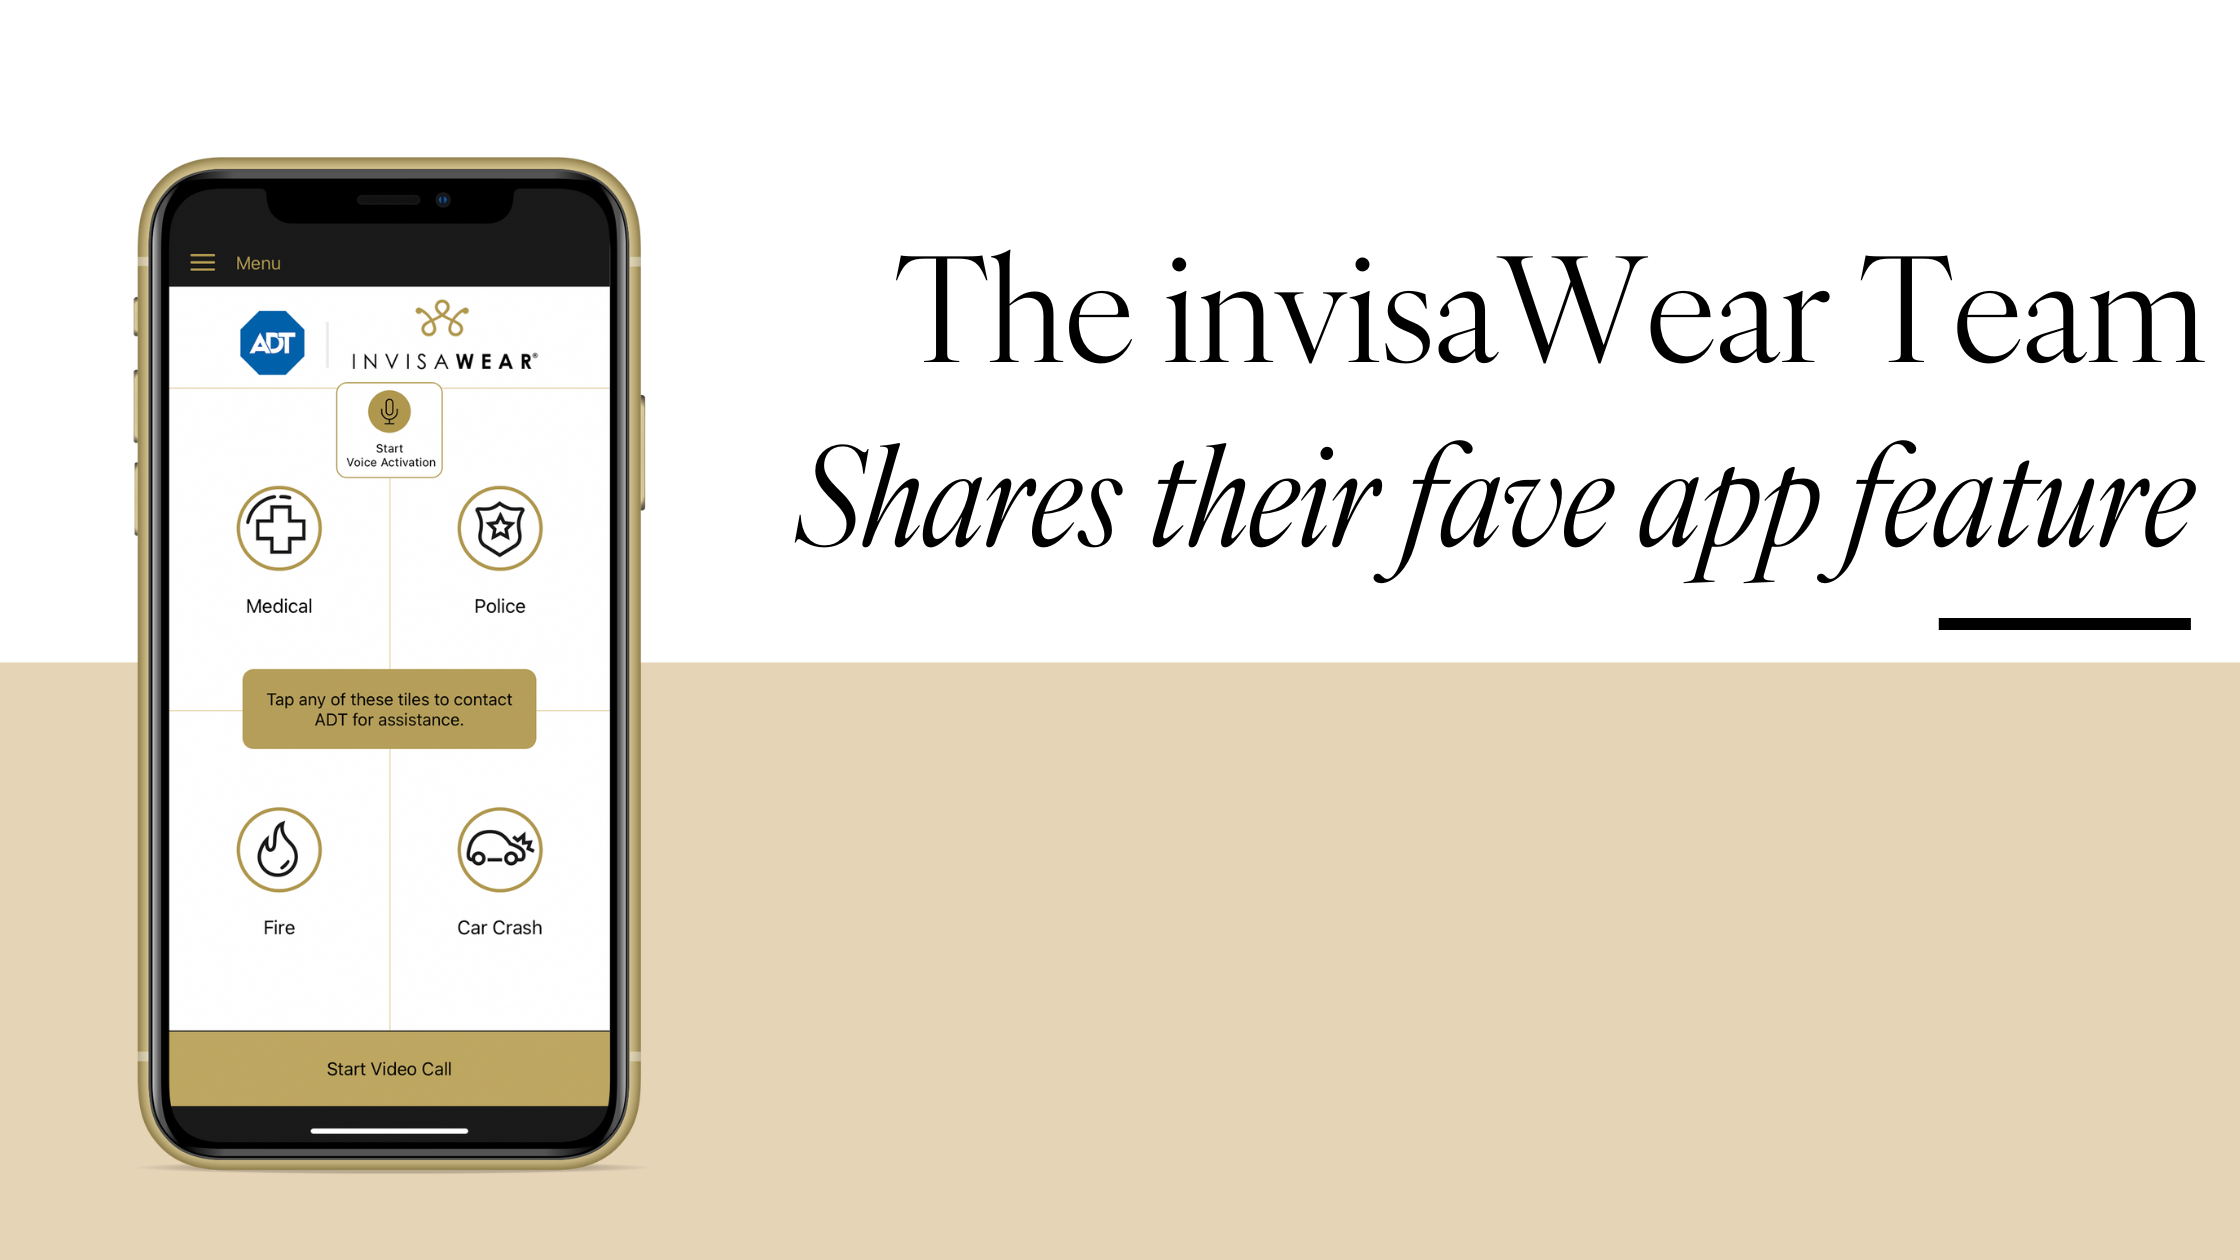 The invisaWear Team's Favorite App Feature